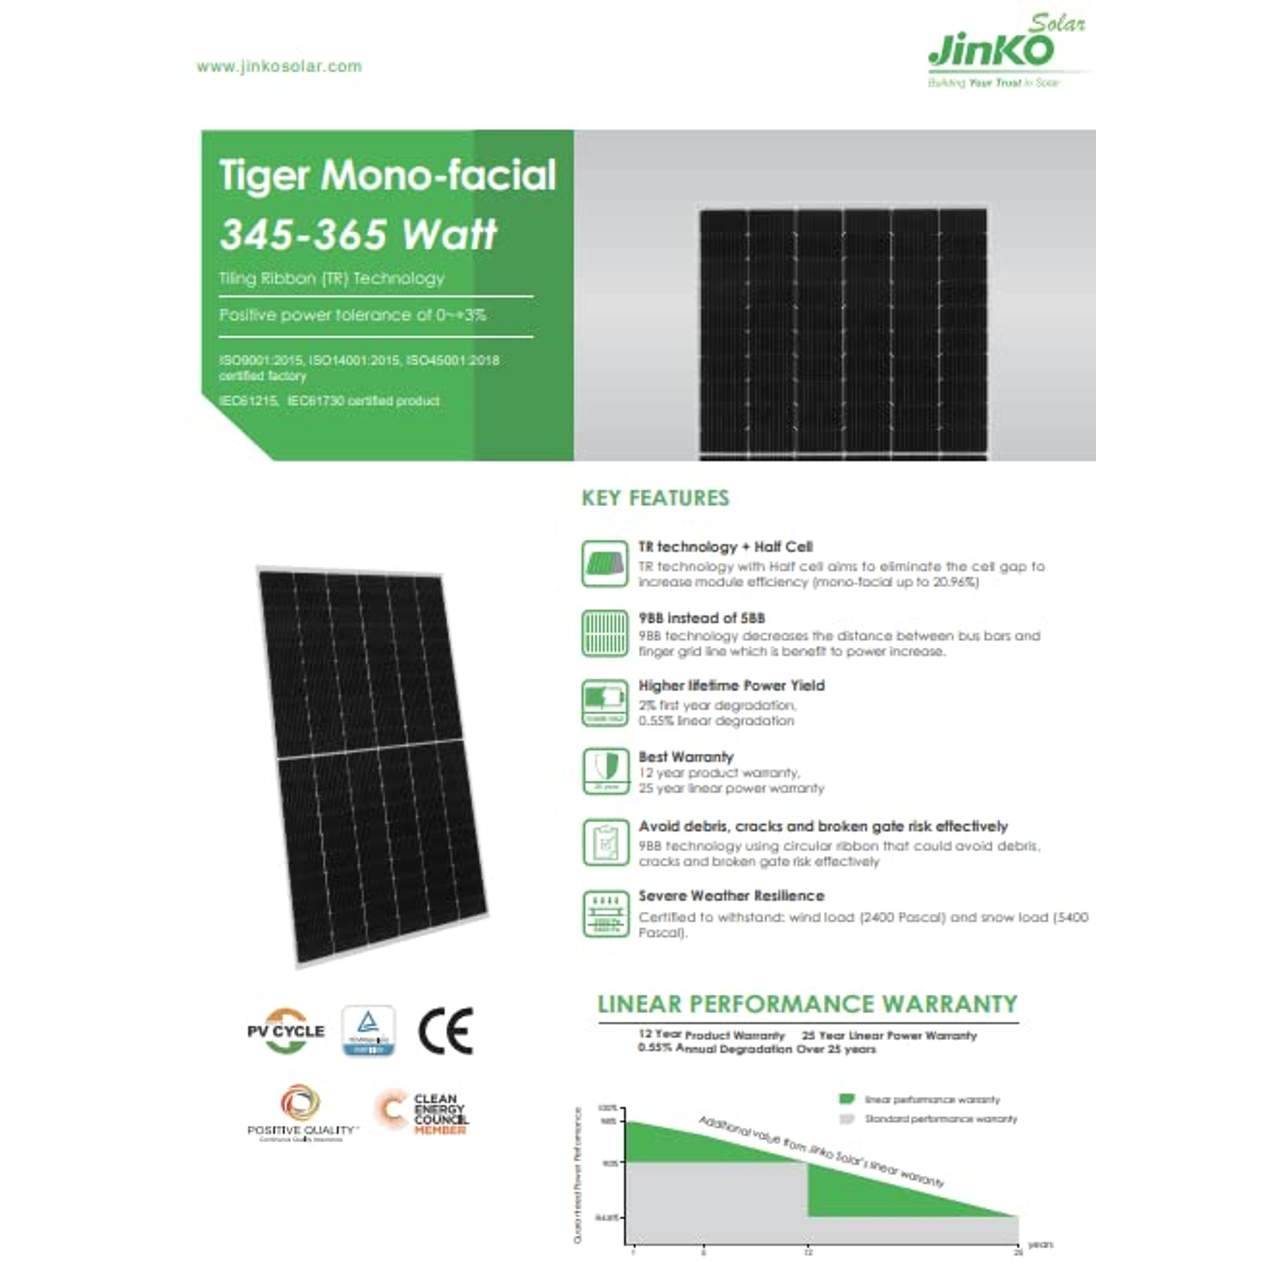 volks-energie Mini-Solaranlage 330Wp